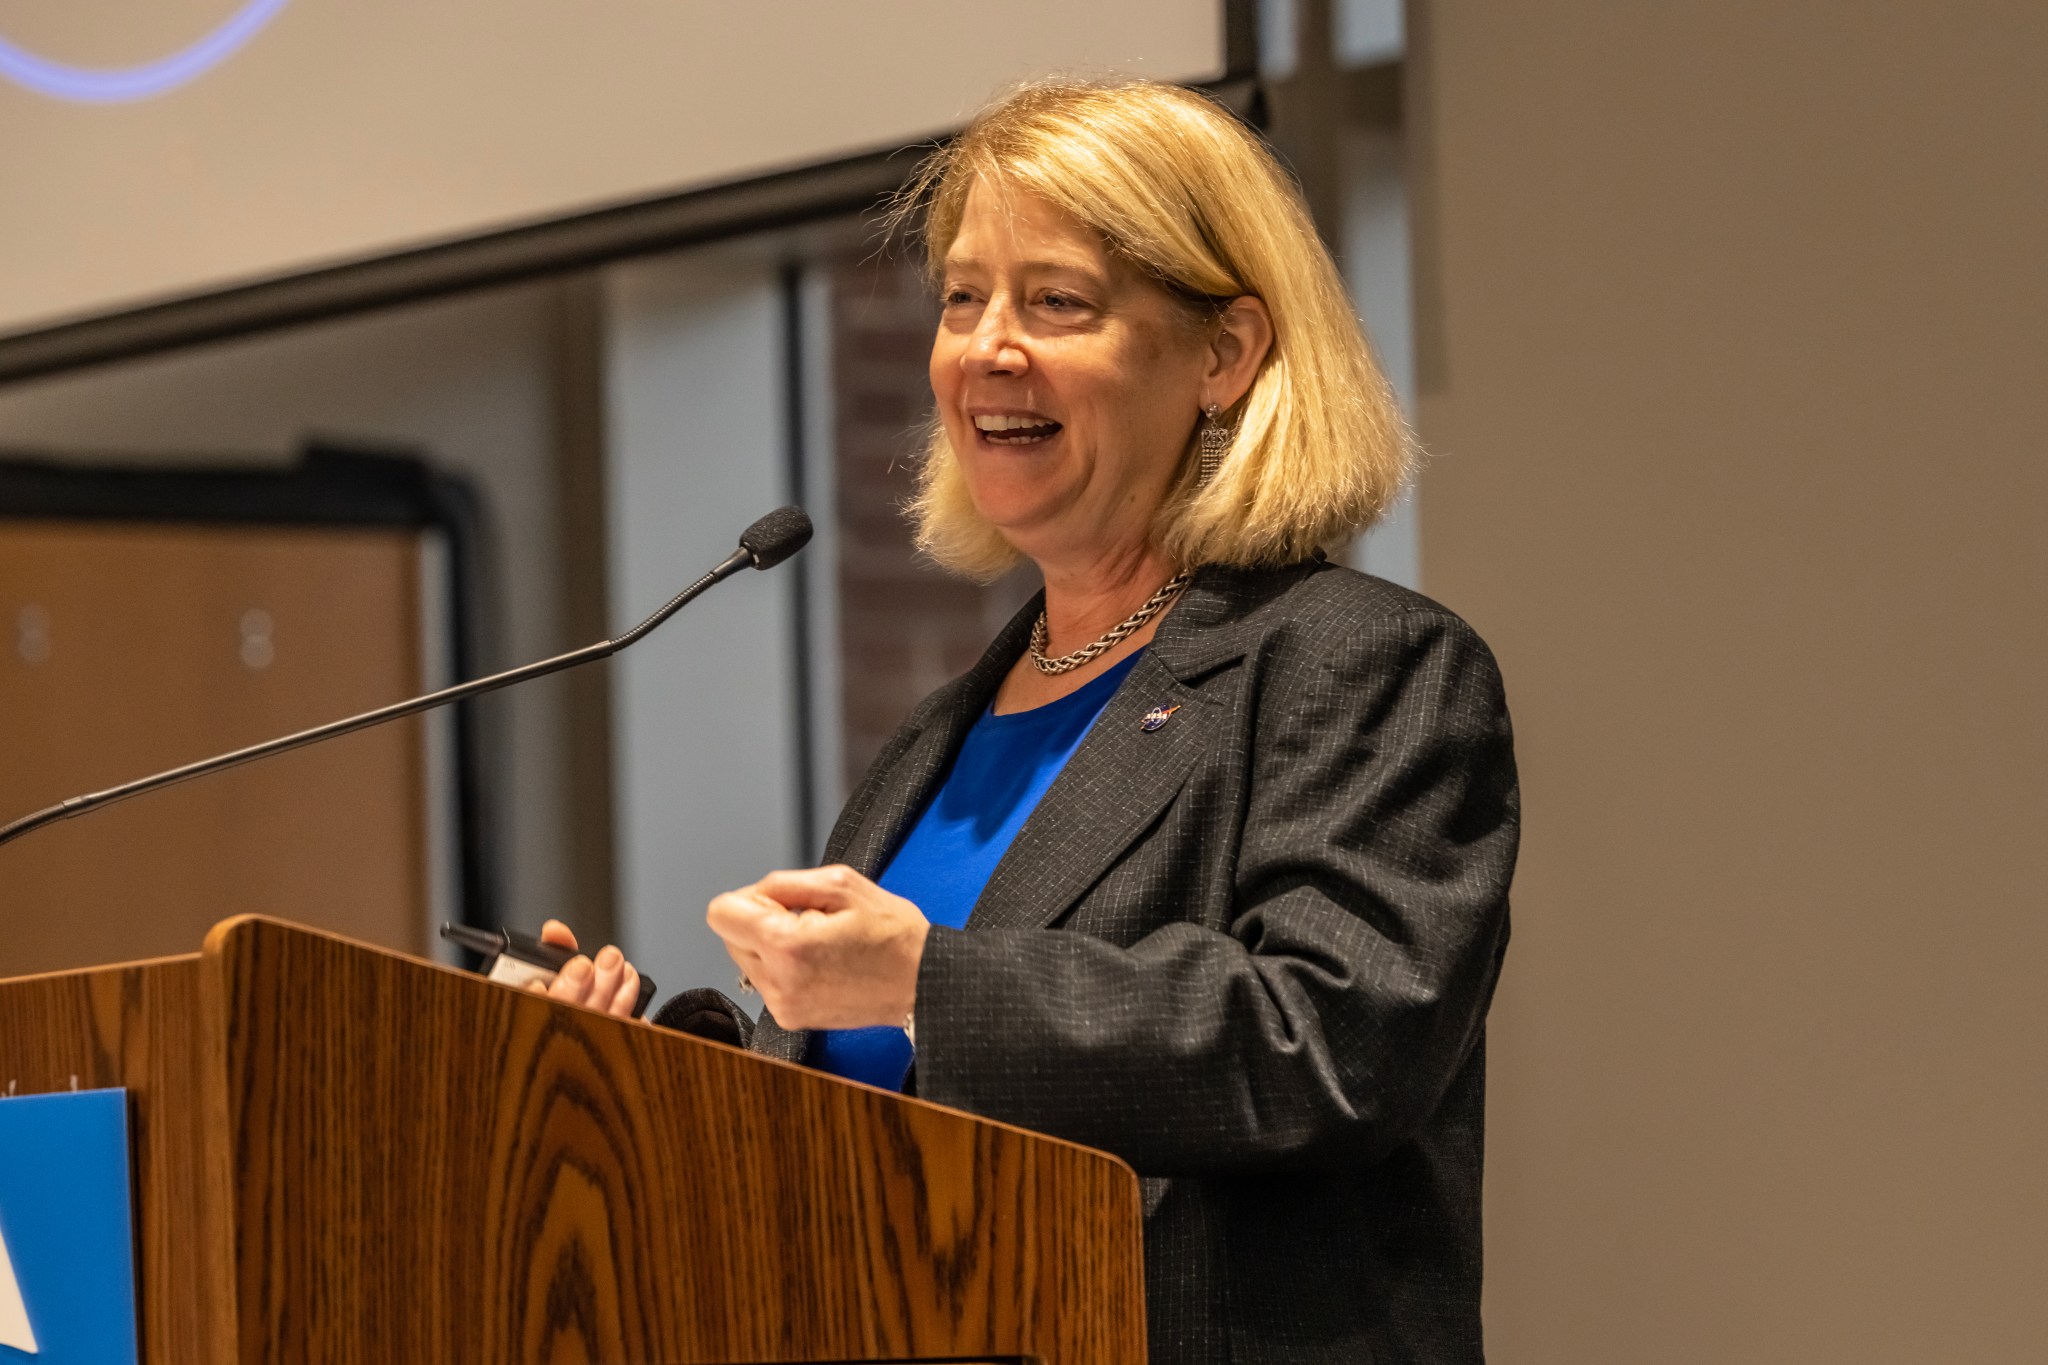 NASA Deputy Administrator Pam Melroy stands at a podium giving a keynote presentation.